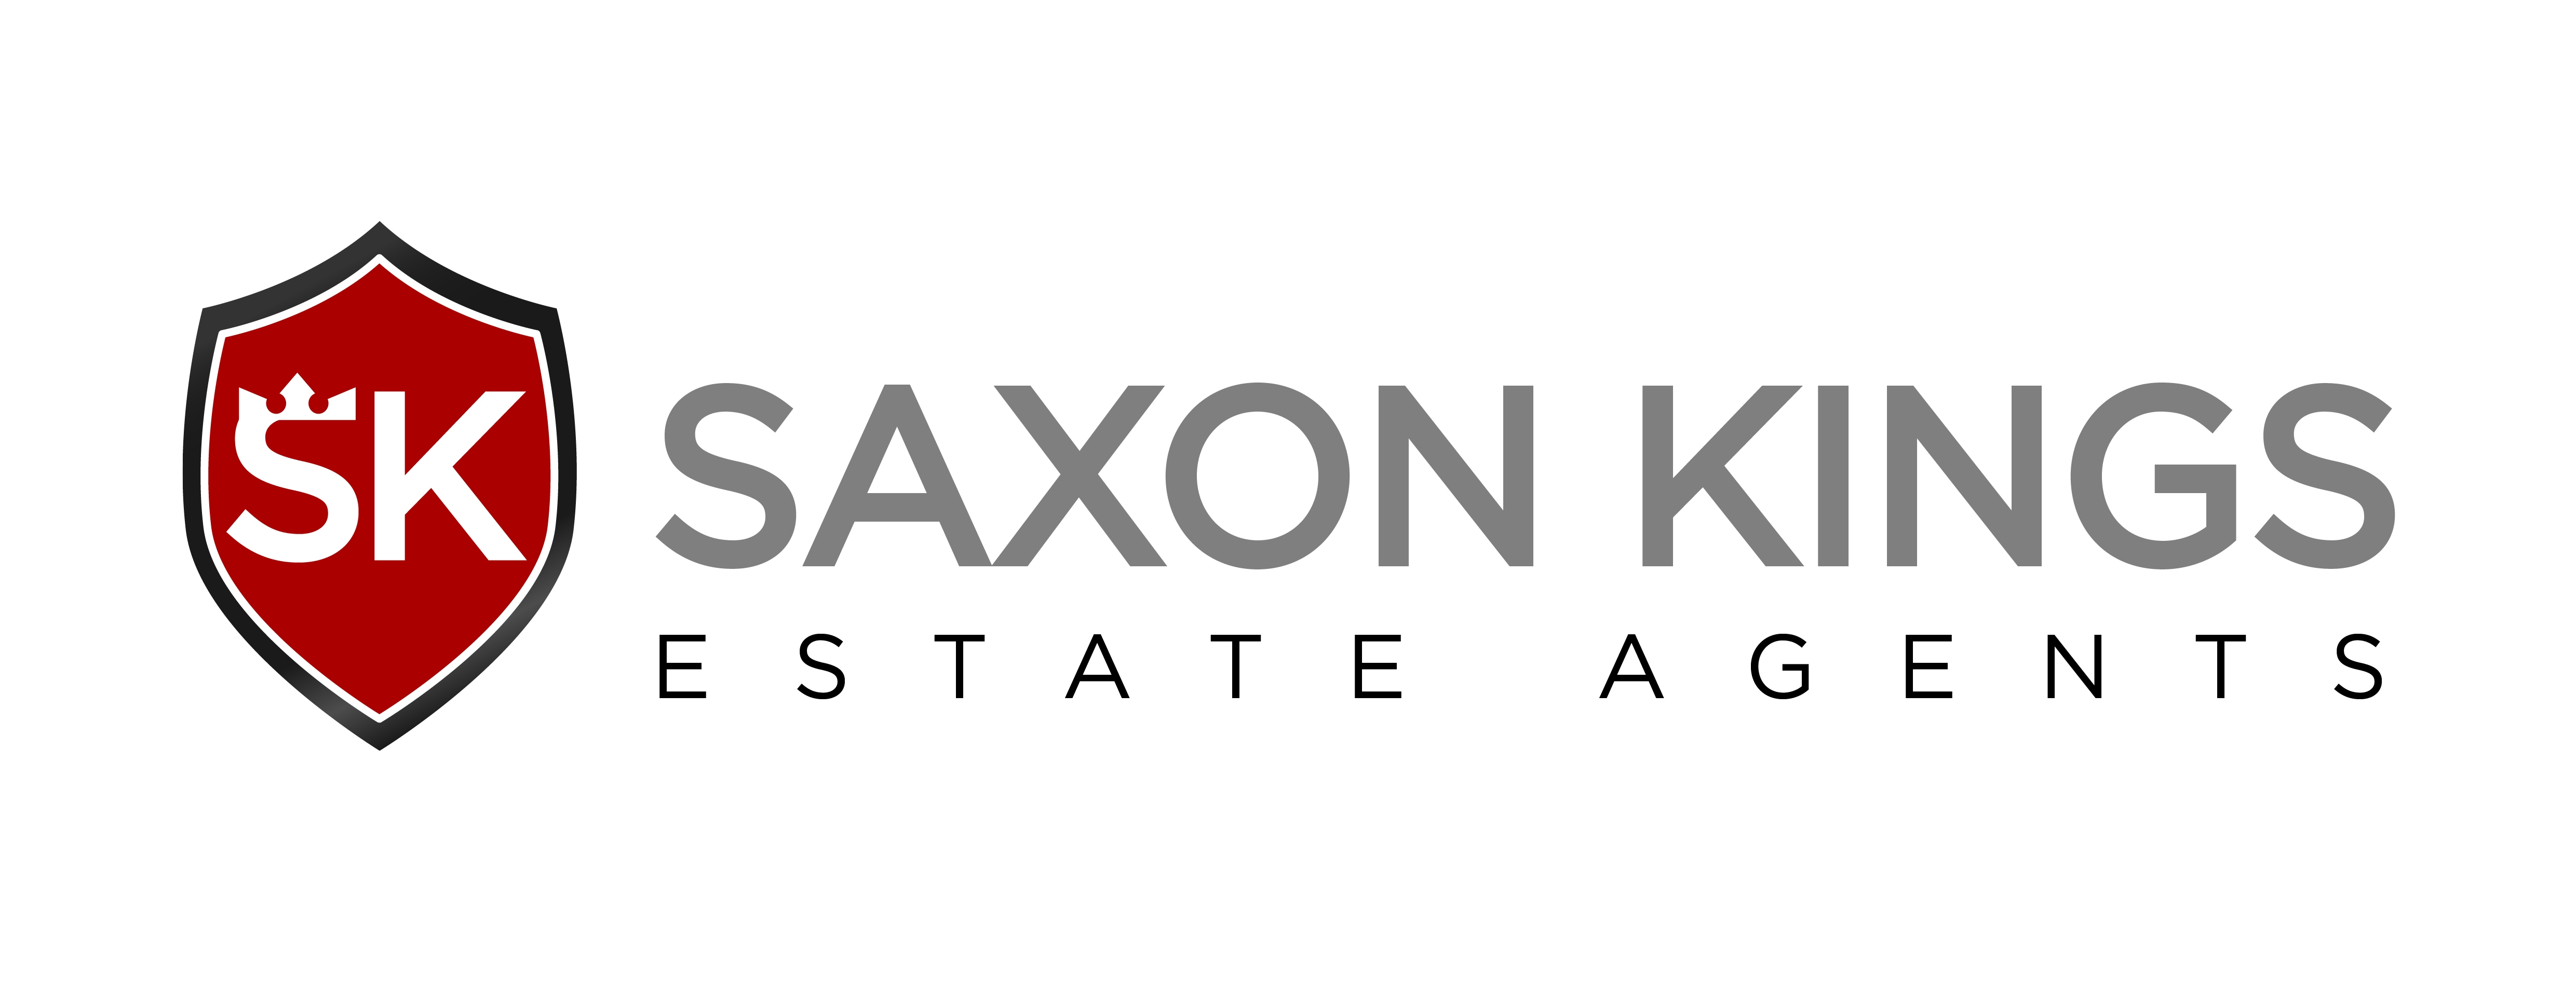 Saxon Kings's Company Logo